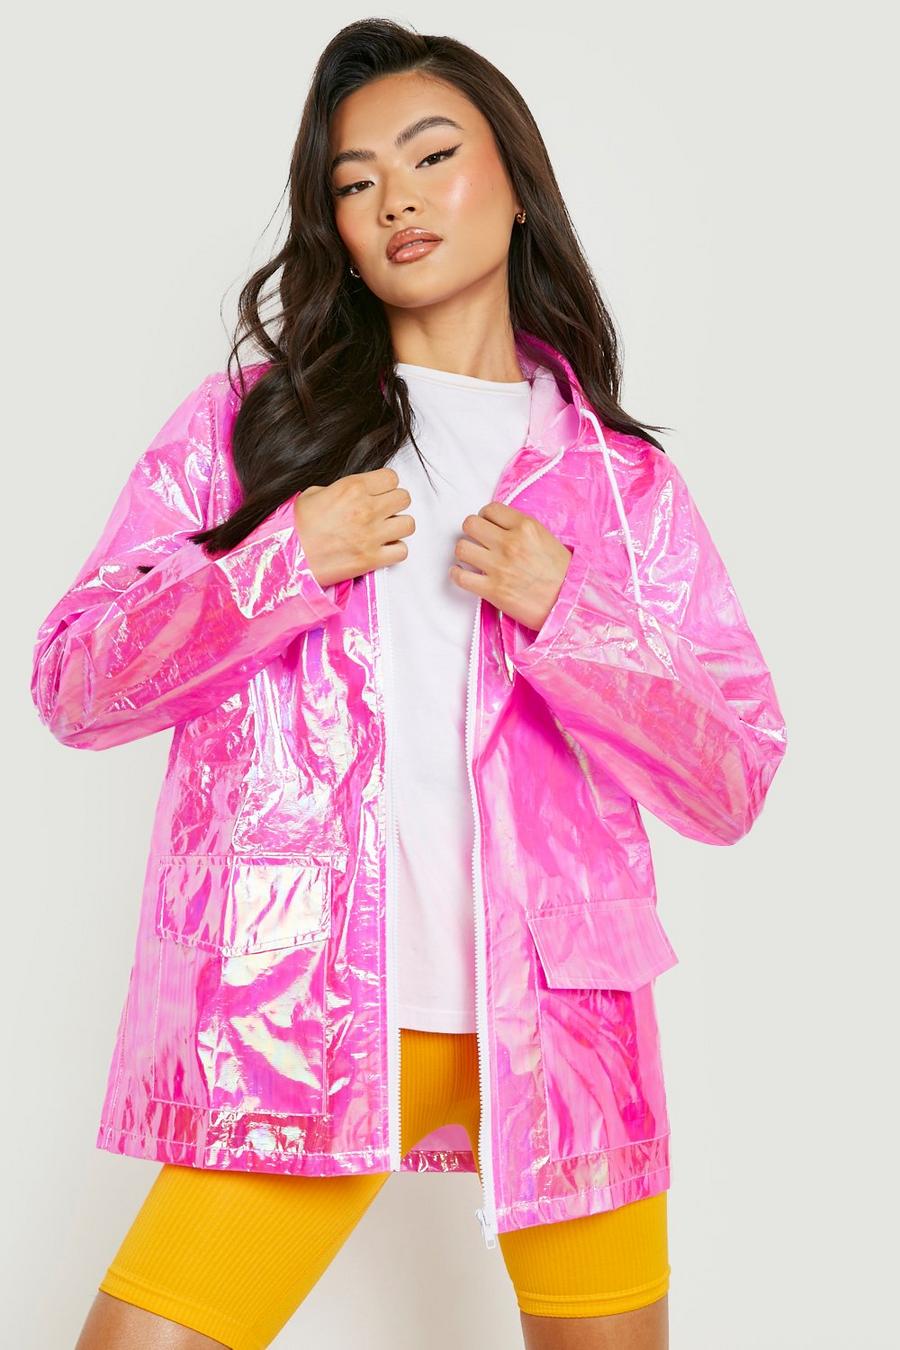 Click Selfie Ladies Plus Size Kagool Hooded Festival Waterproof Mac Raincoats Jackets S-5XL 